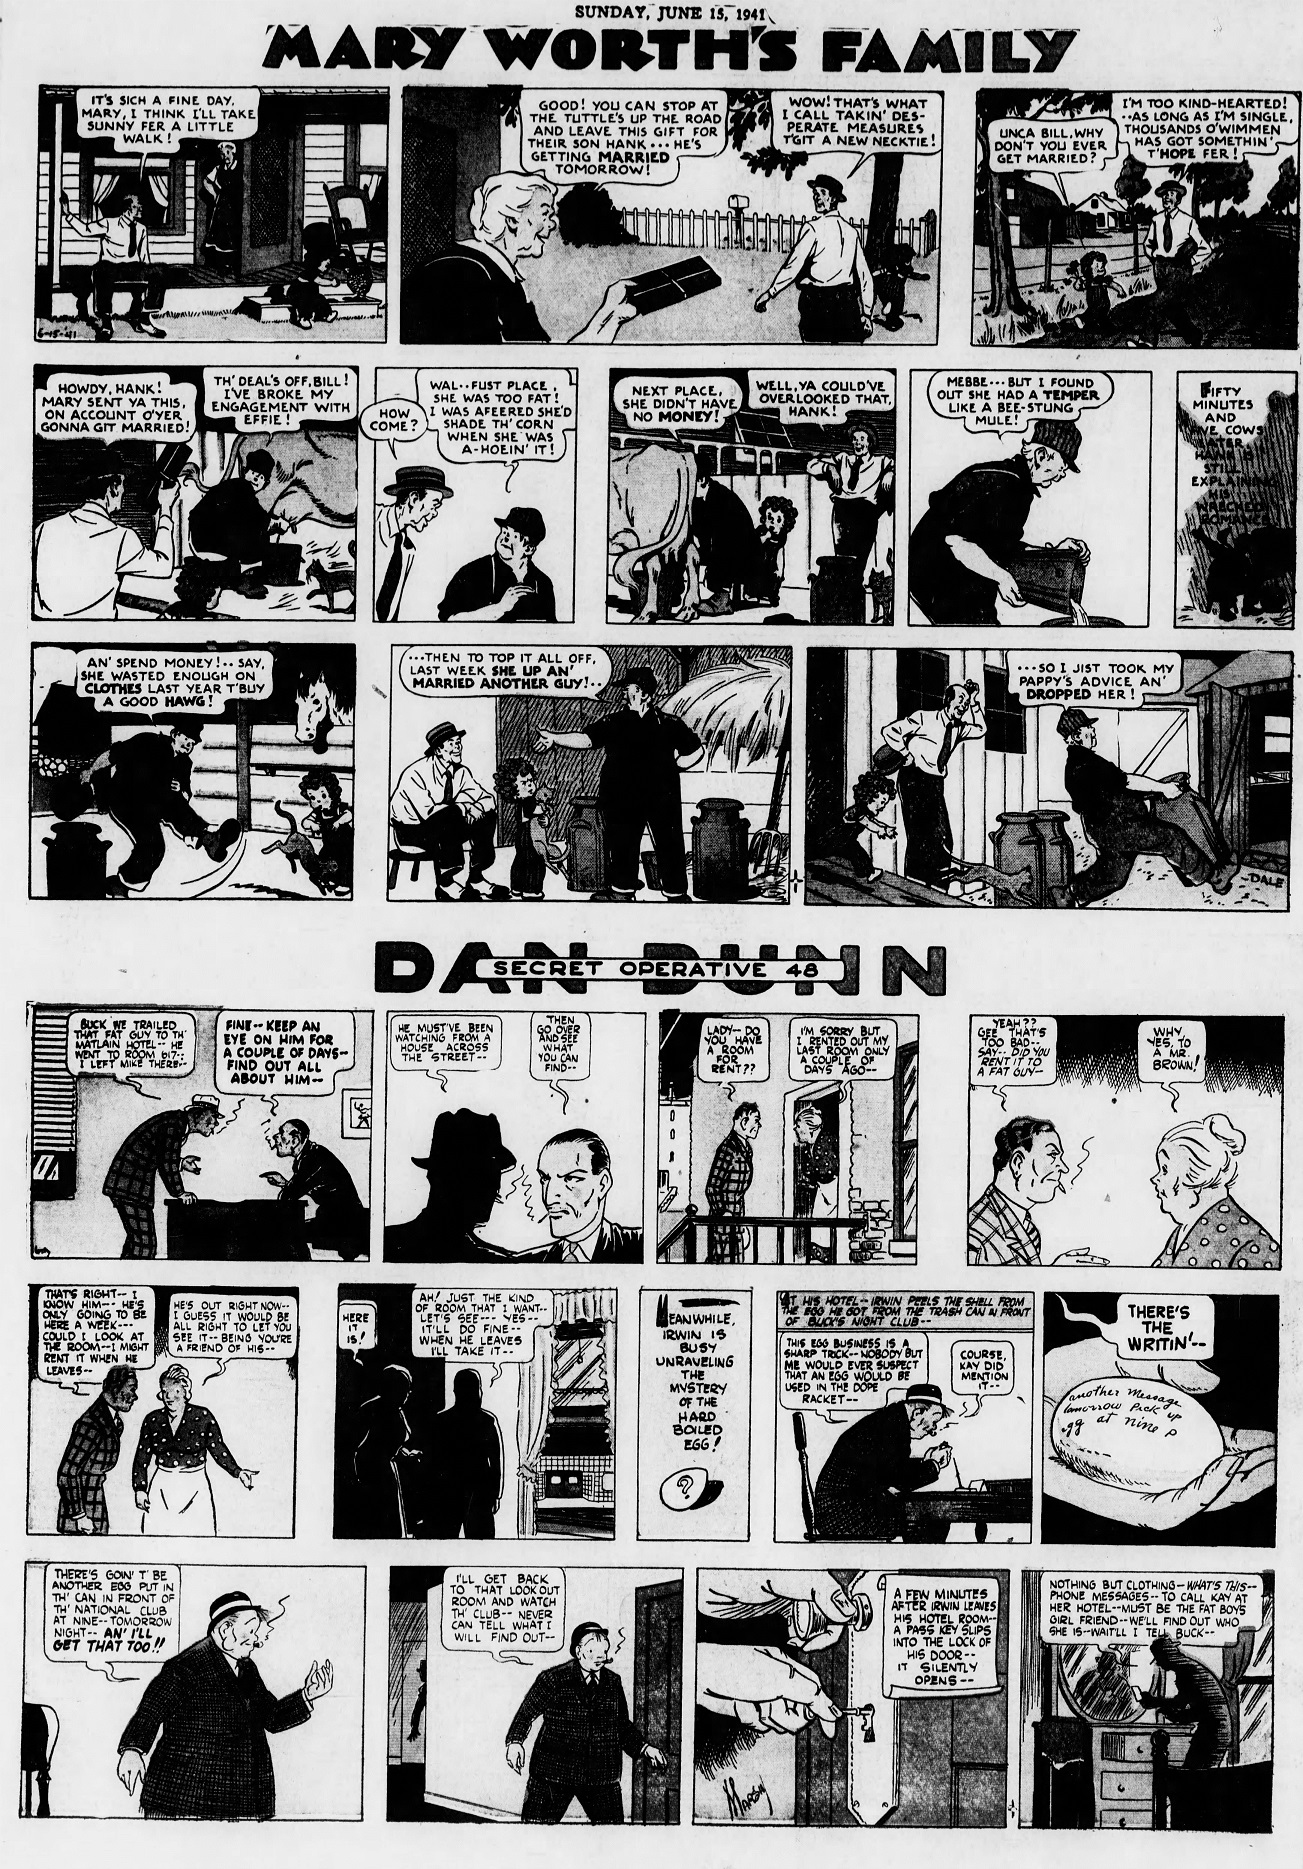 The_Brooklyn_Daily_Eagle_Sun__Jun_15__1941_ (6).jpg